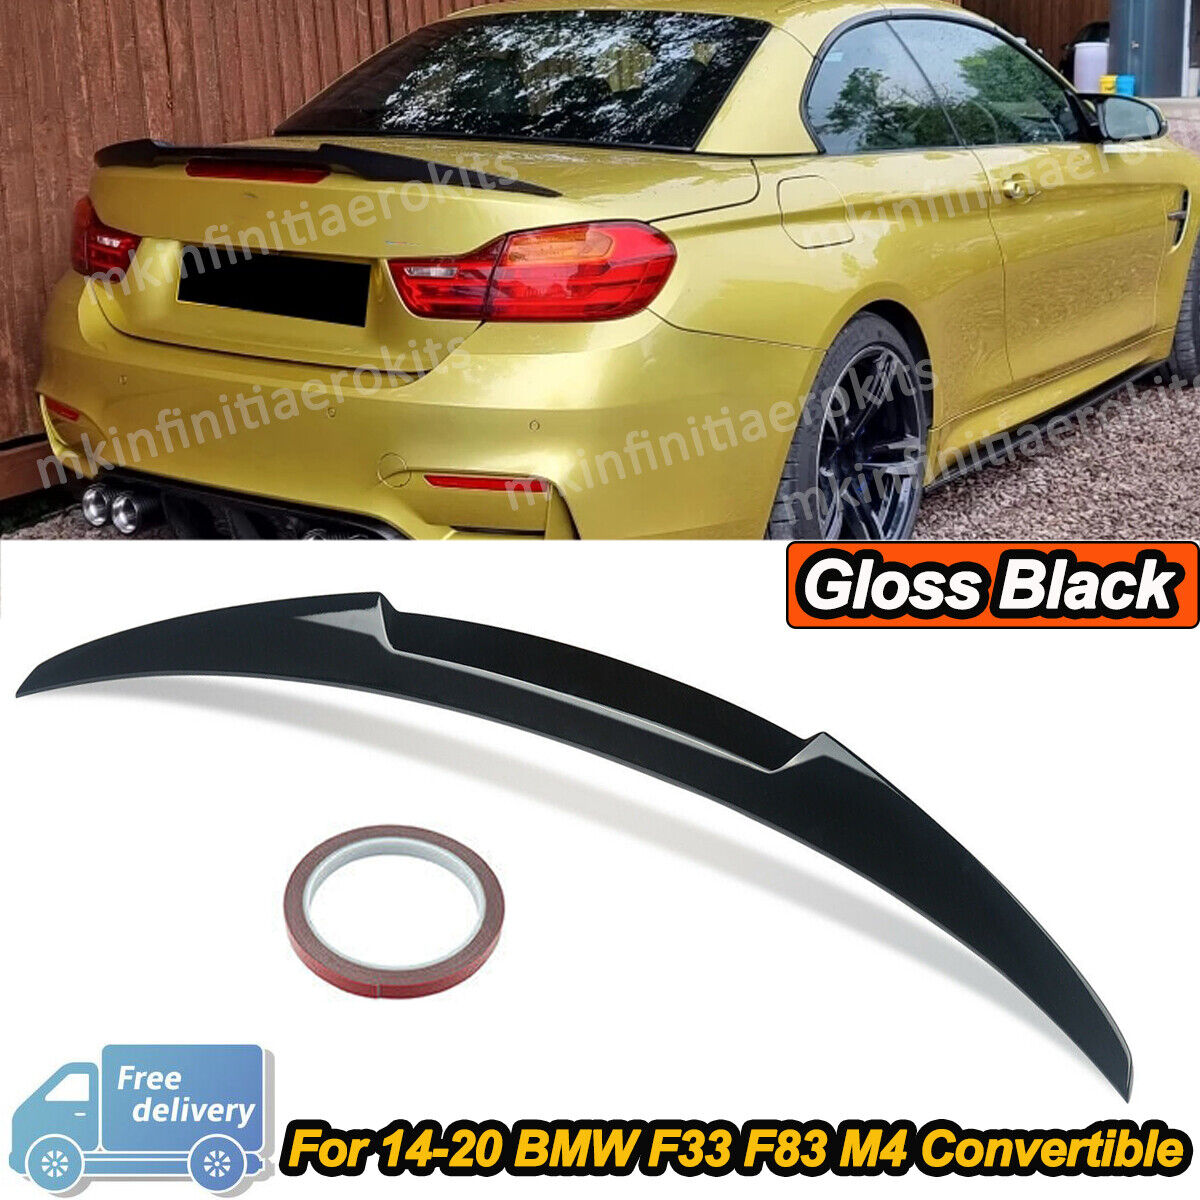 FOR BMW 428i 435i F33 F83 M4  Gloss Black HighKick M4 Style Rear Trunk Spoiler